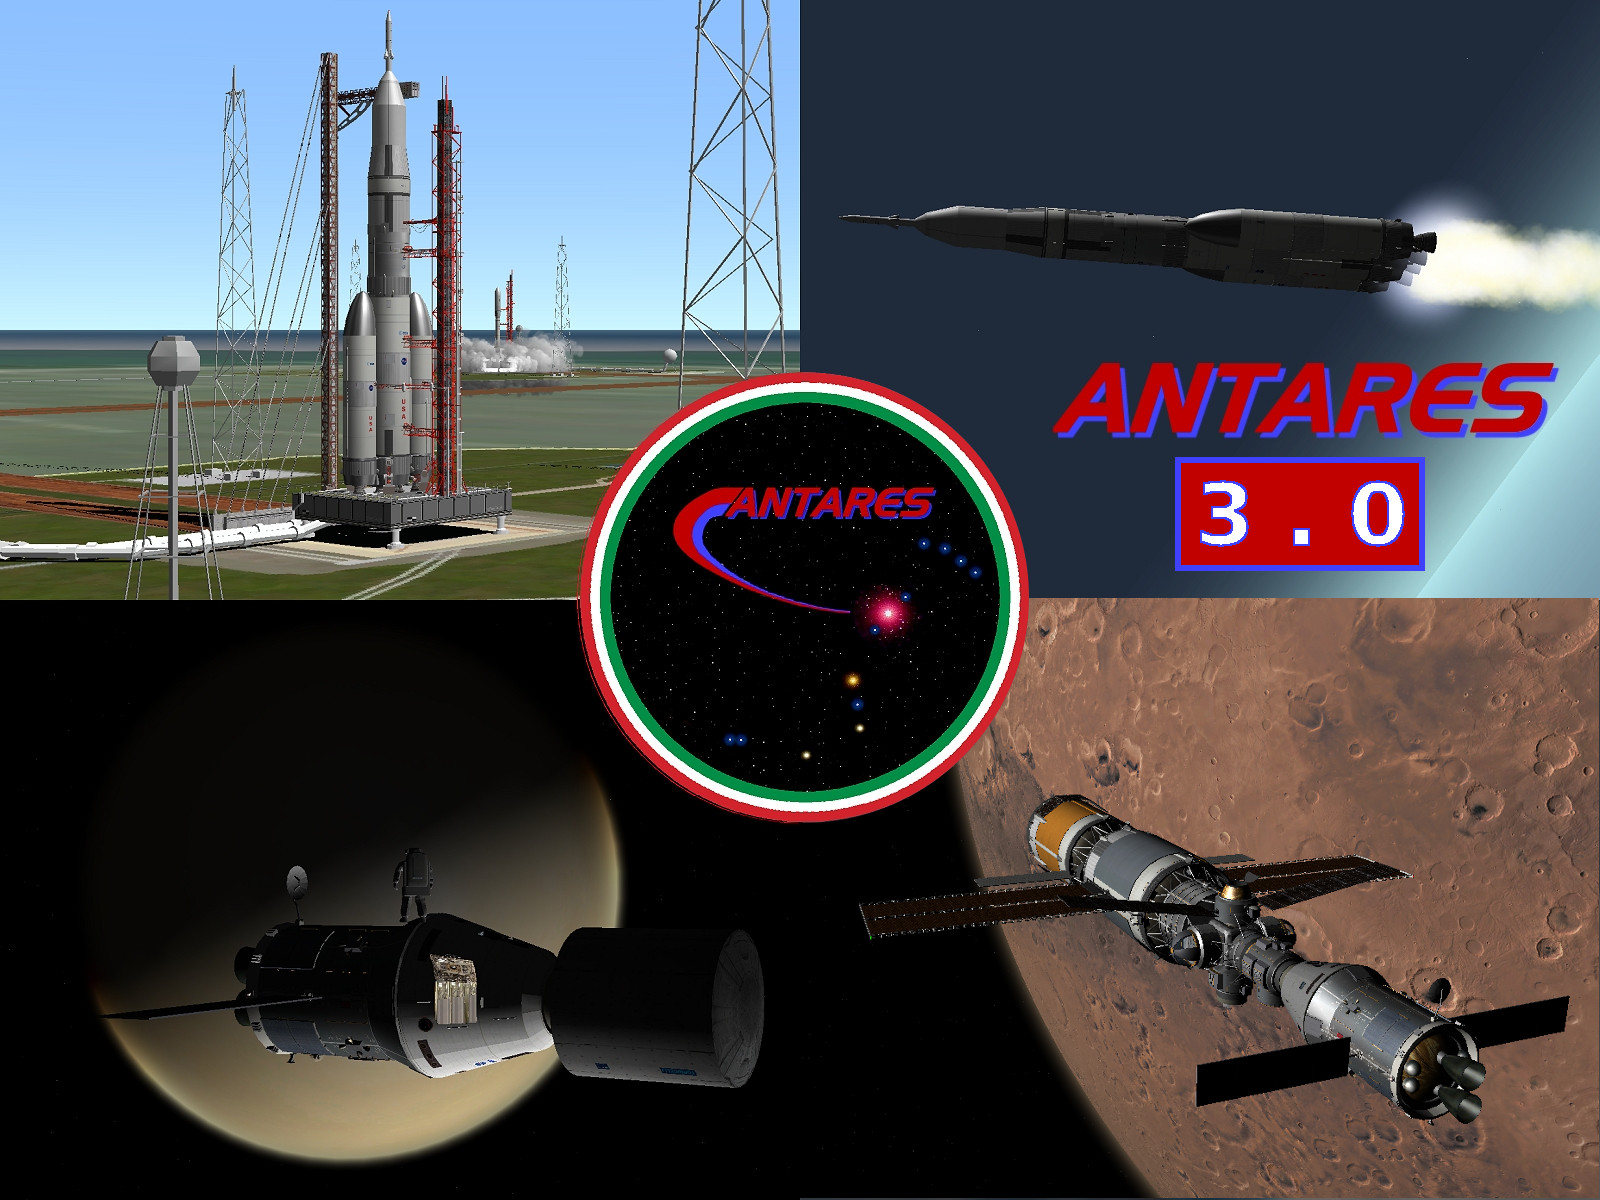 Antares+Manned+Spacecraft++3.0_b64reclaimed_4eb5b558-1808-4543-a610-383916108338.jpg